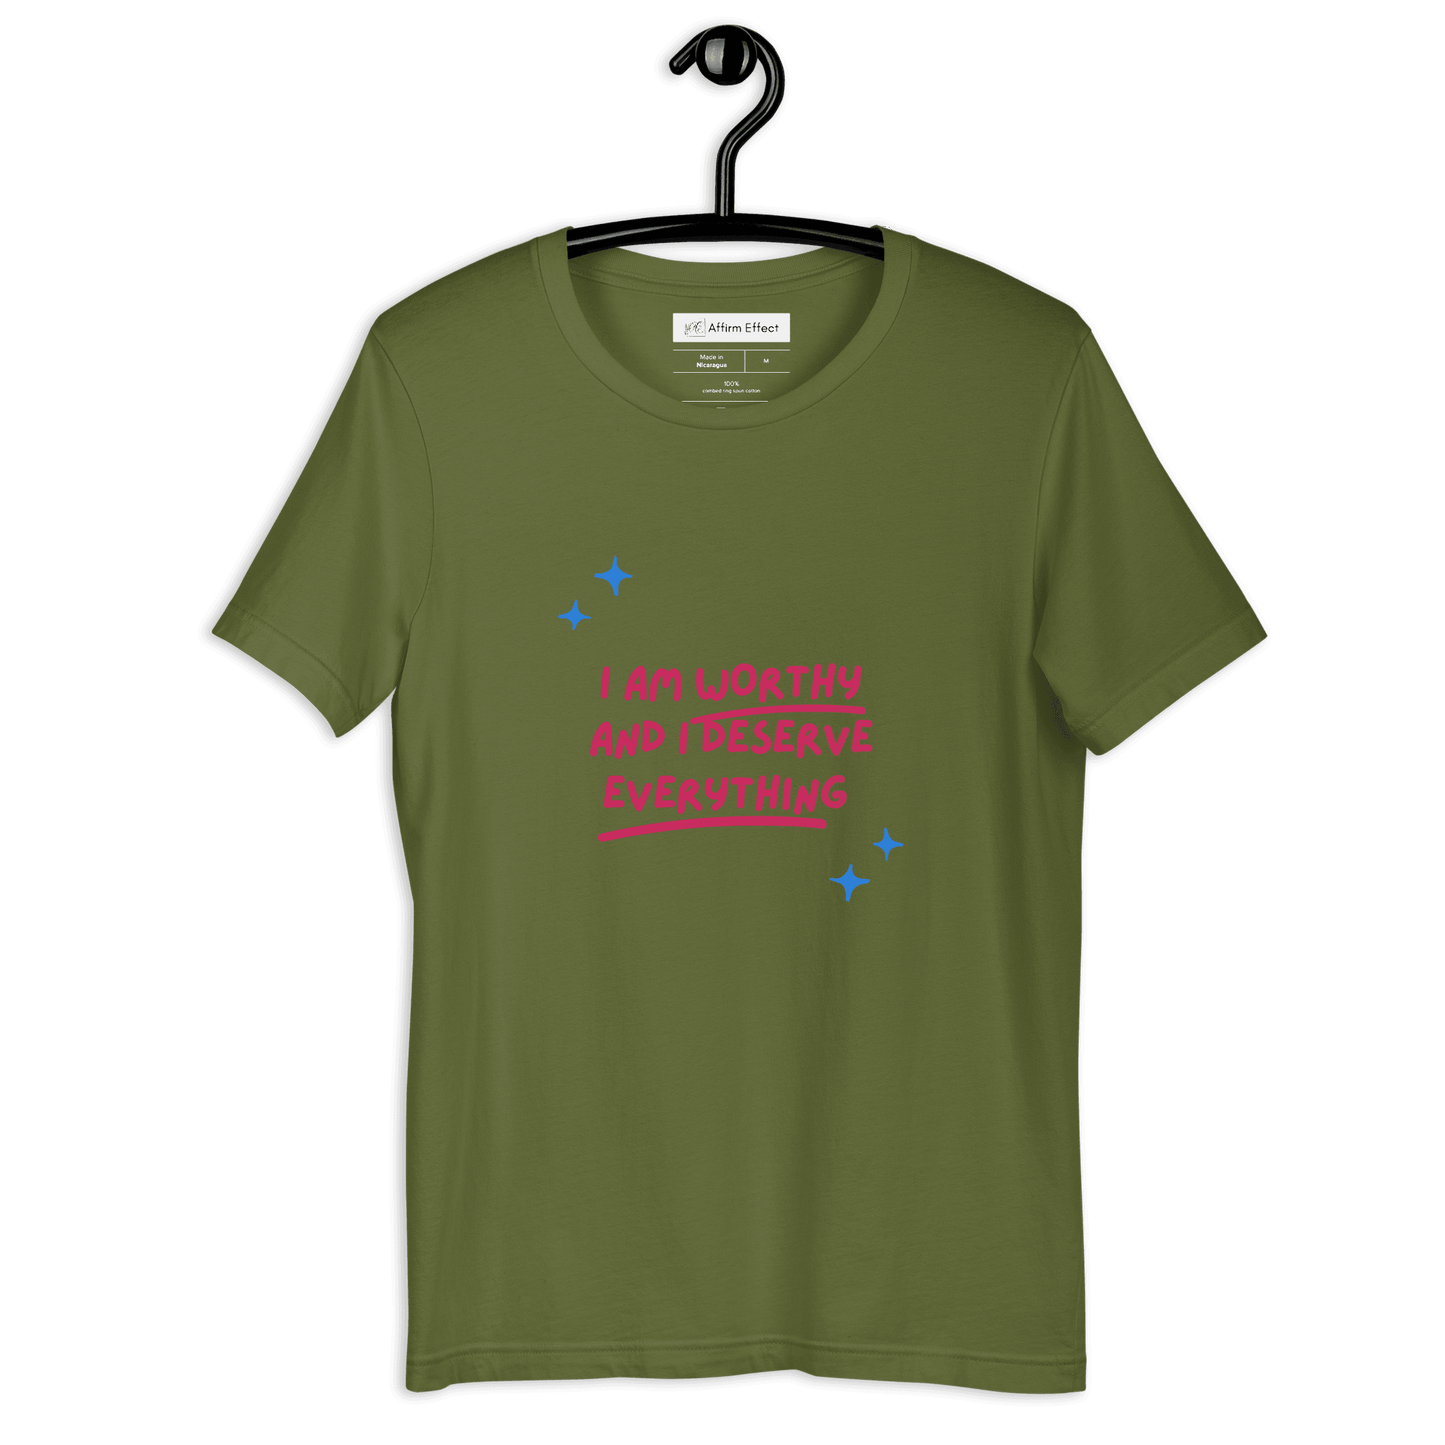 I Am Worthy (New) Short-Sleeve Unisex T-Shirt | Positive Affirmation Tee - Affirm Effect